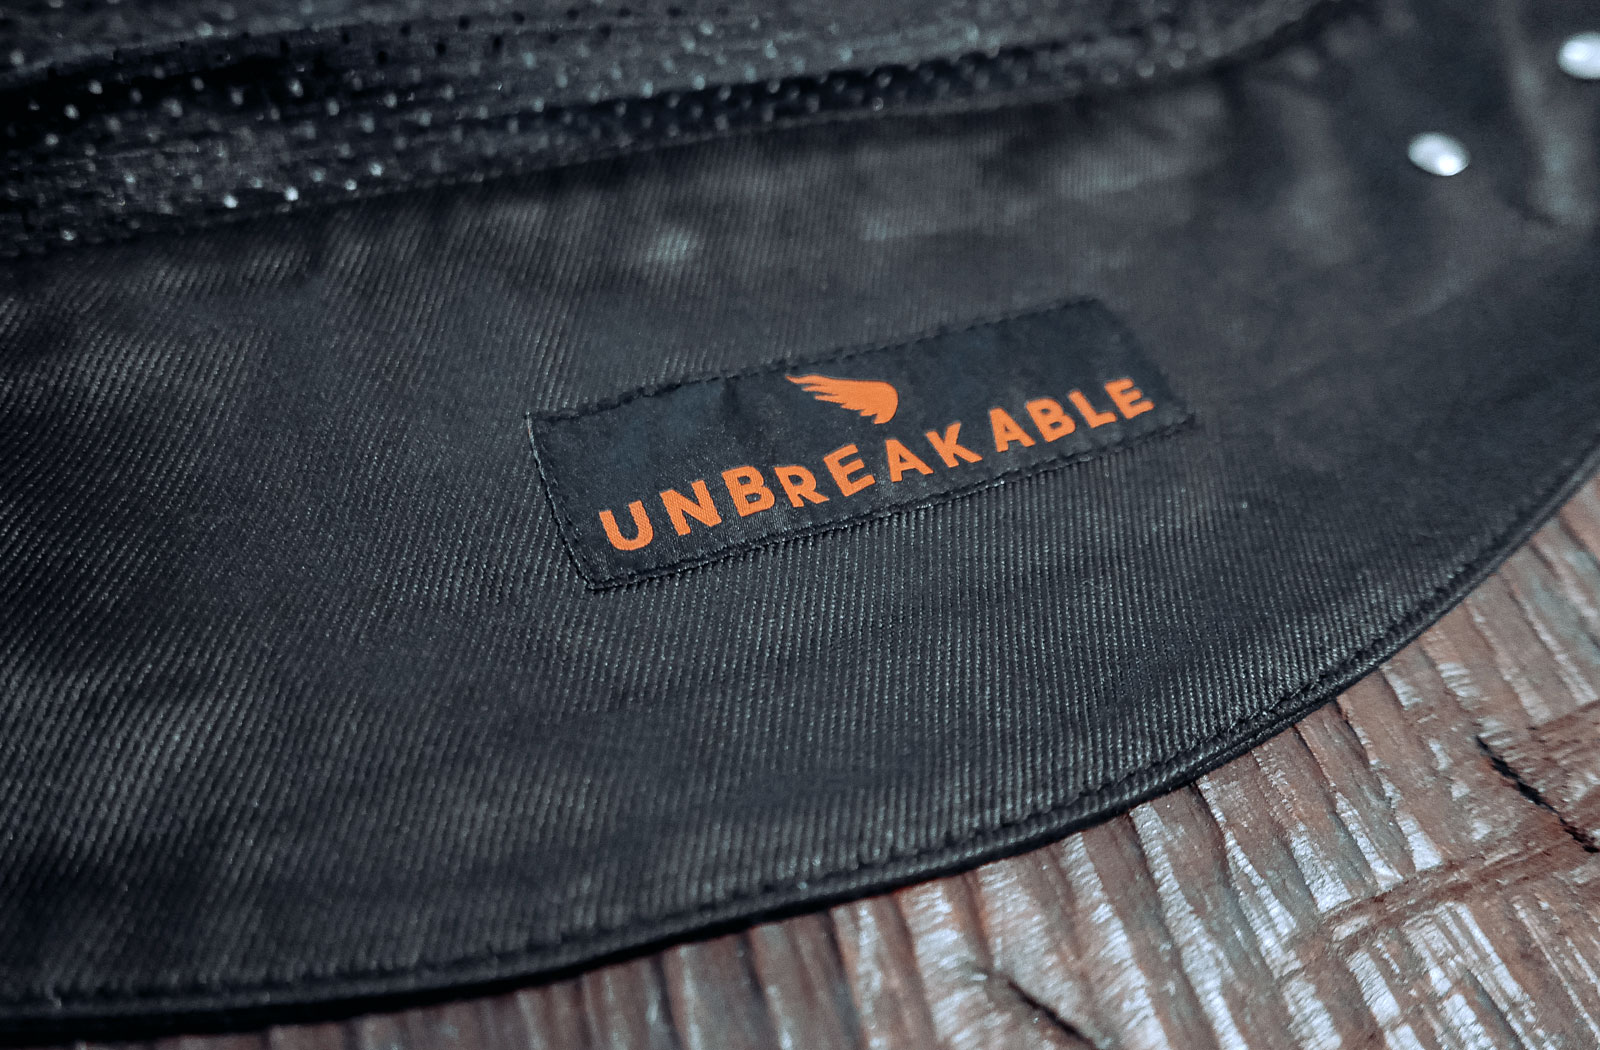 Saint Unbreakable Jacket review